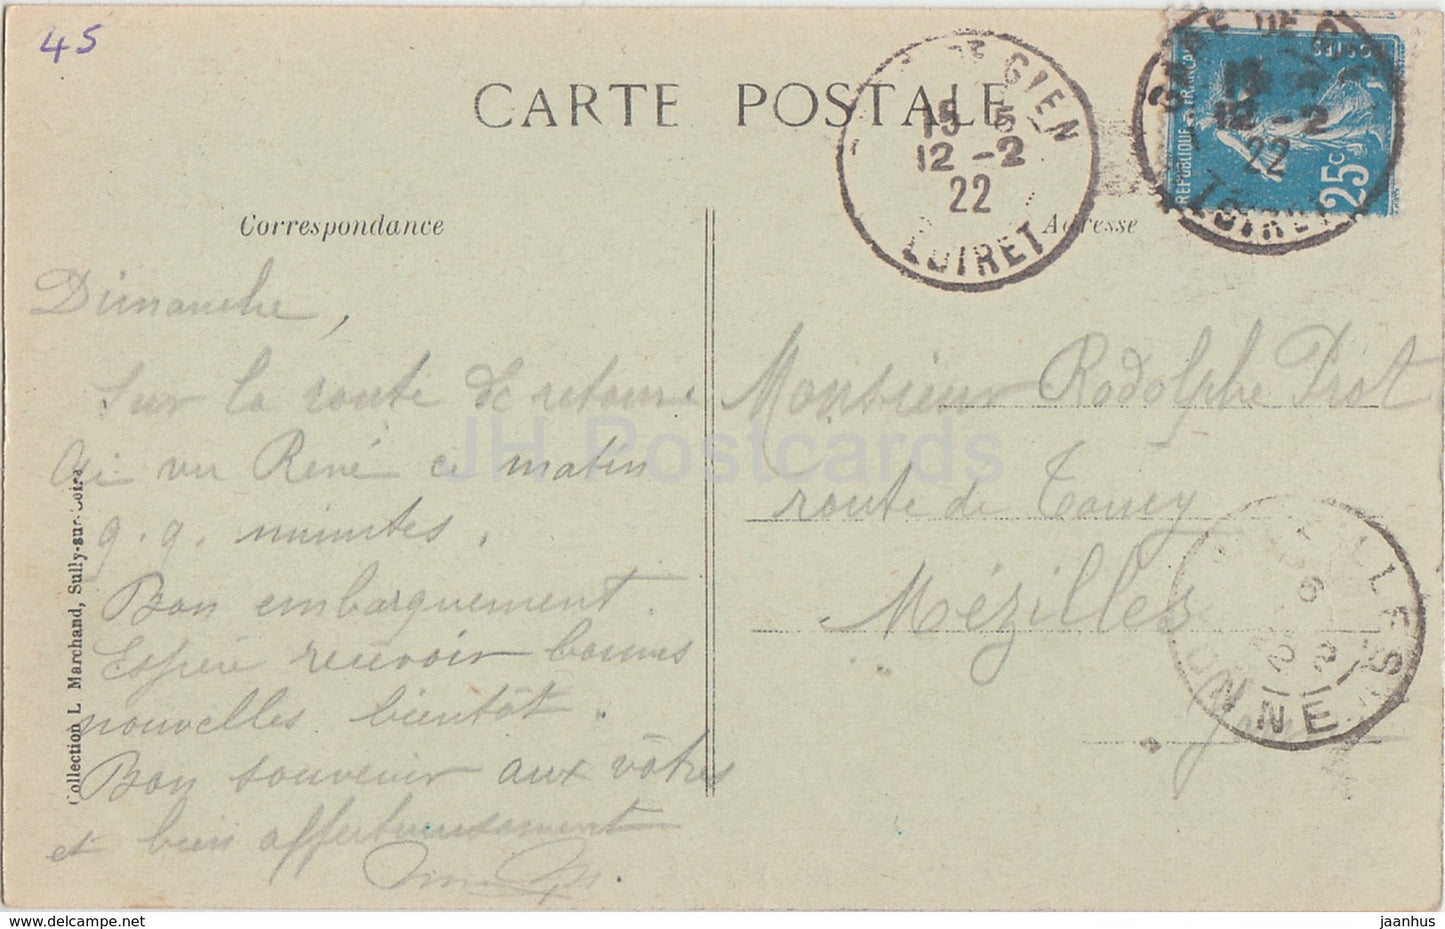 La Bussiere - Le Chateau - Schloss - 1922 - alte Postkarte - Frankreich - gebraucht